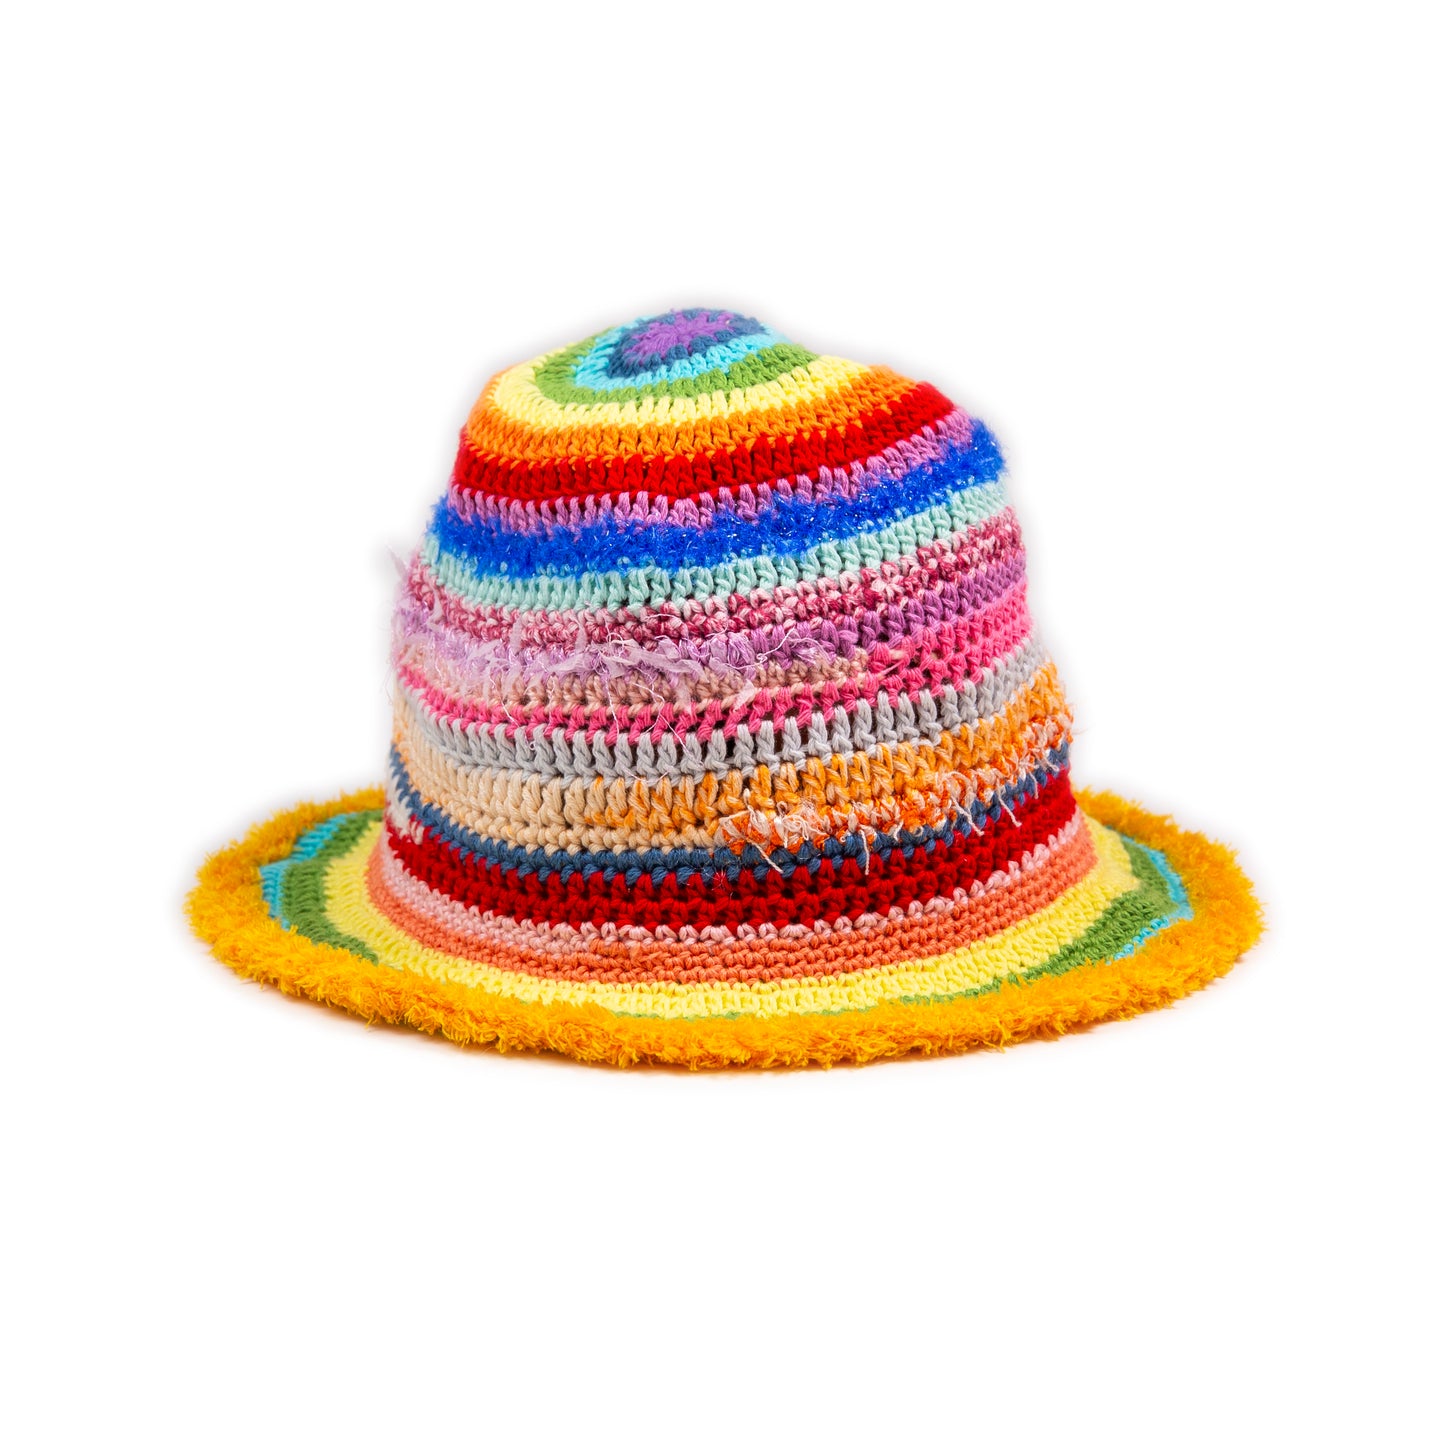 Pelito crochet hat